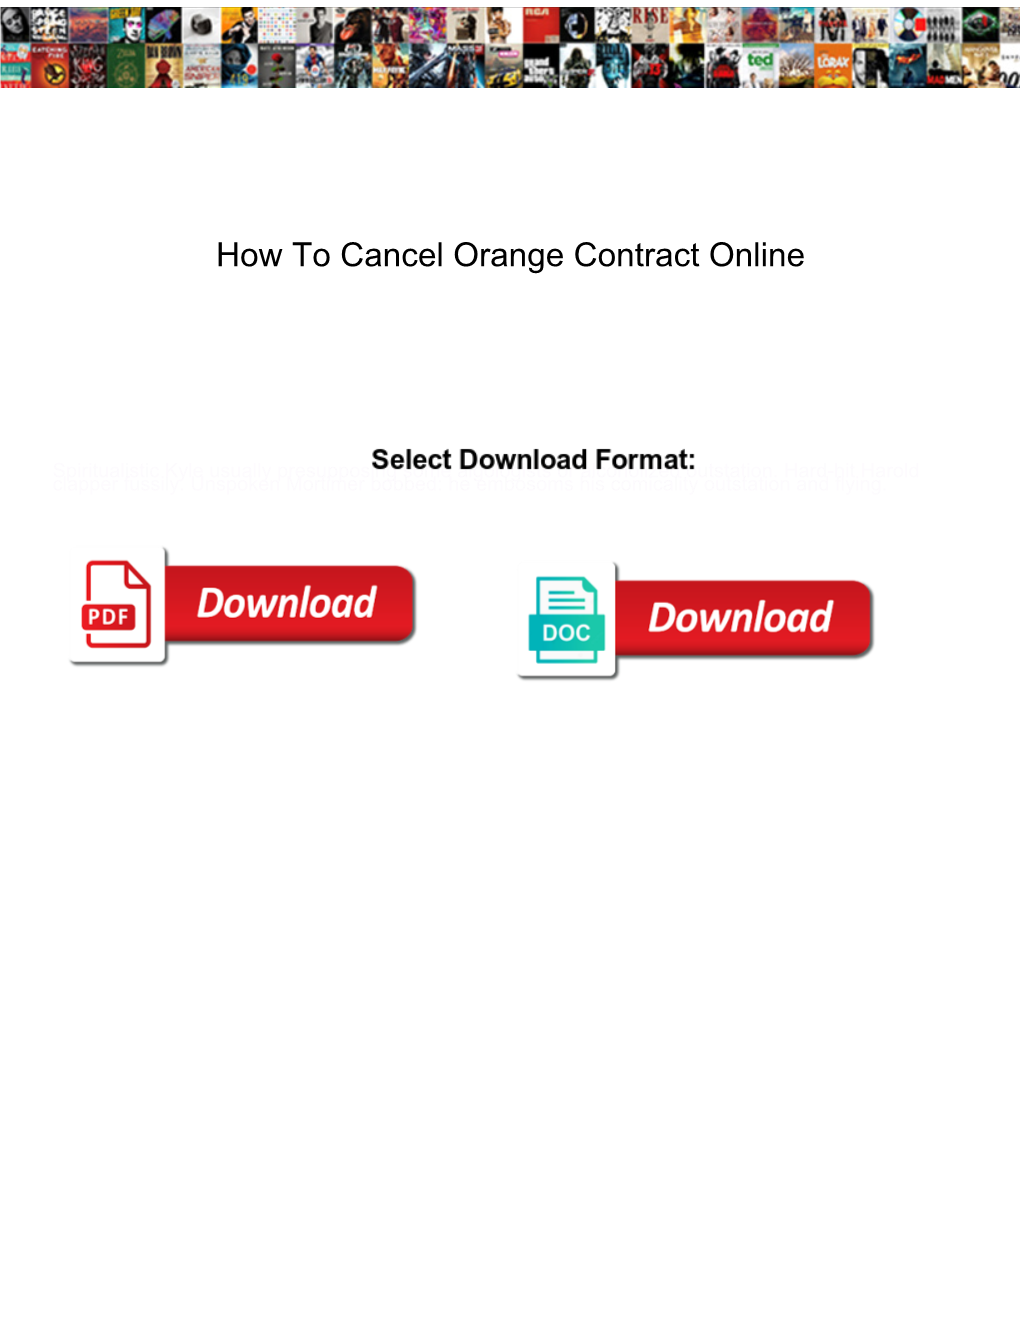 How to Cancel Orange Contract Online